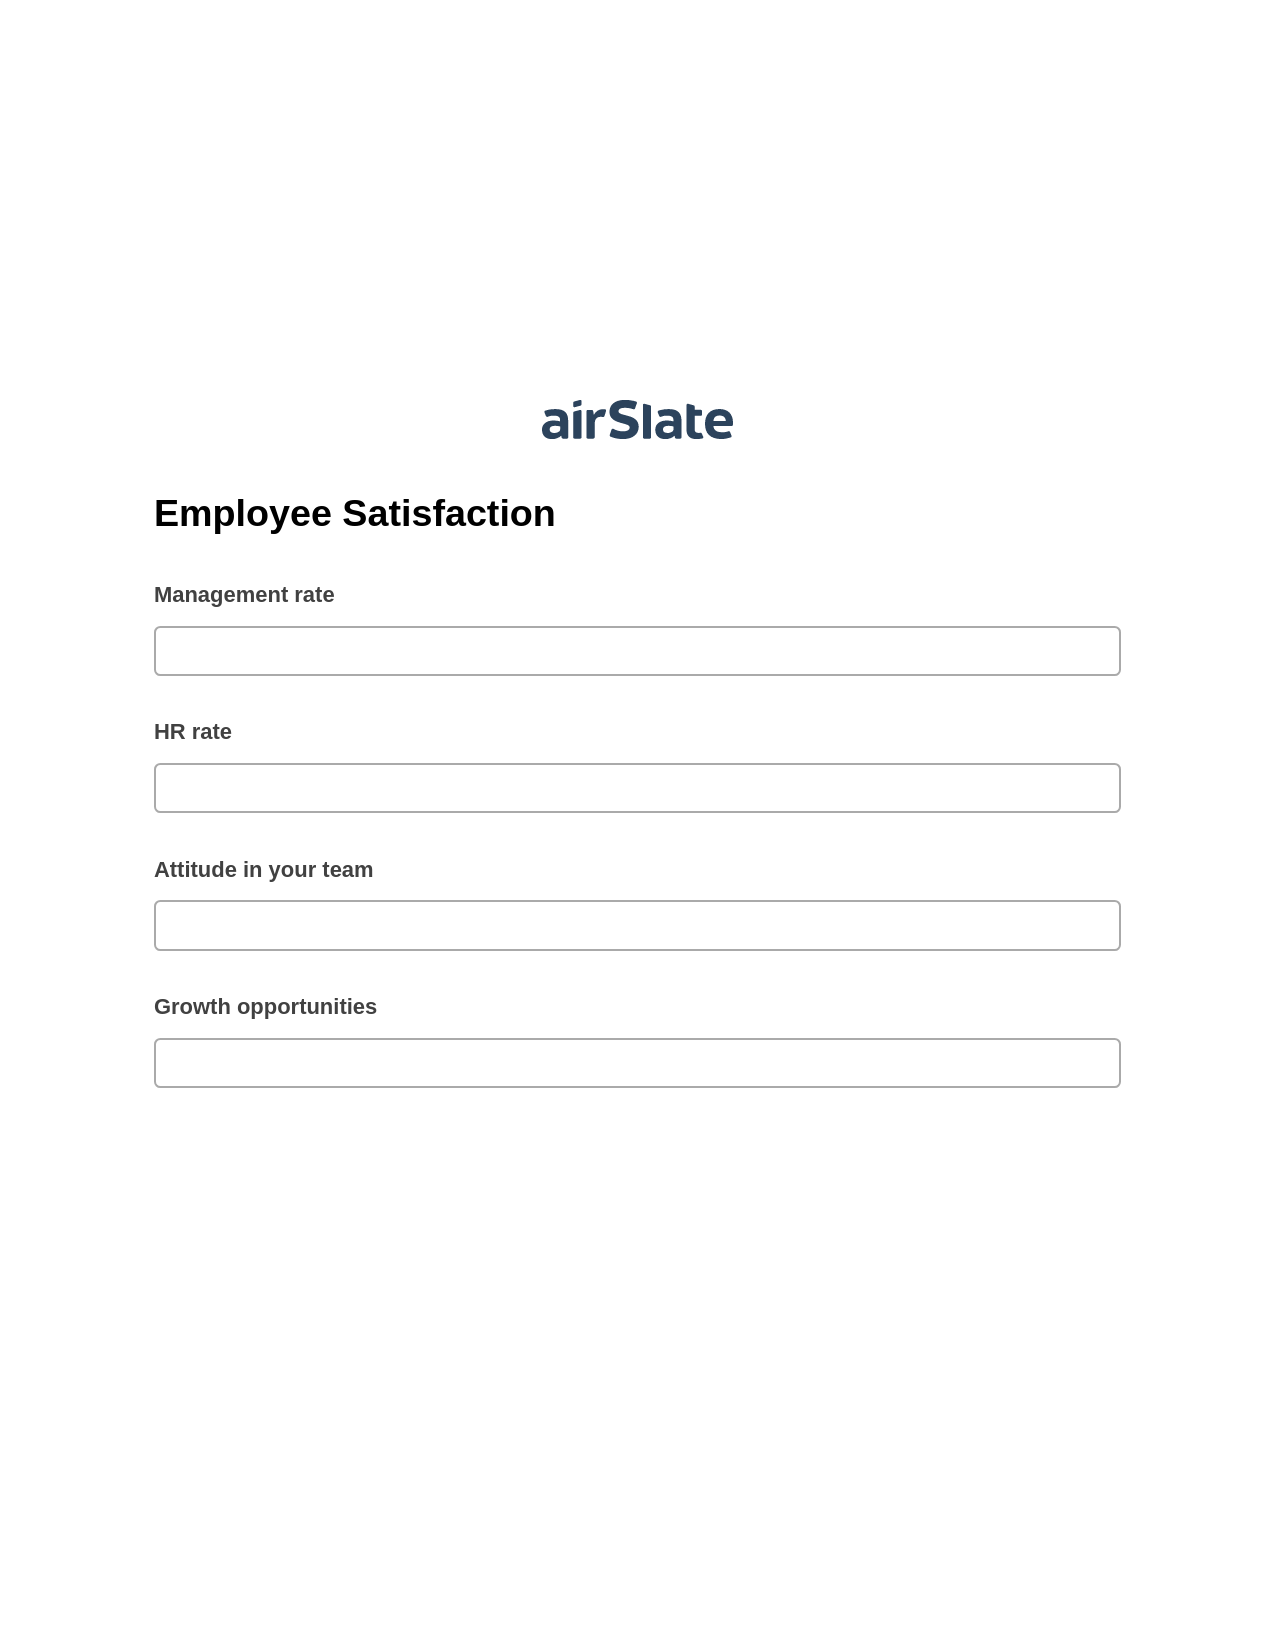 Employee Satisfaction Pre-fill Slate from MS Dynamics 365 Records Bot, Invoke Salesforce Process Bot, Post-finish Document Bot